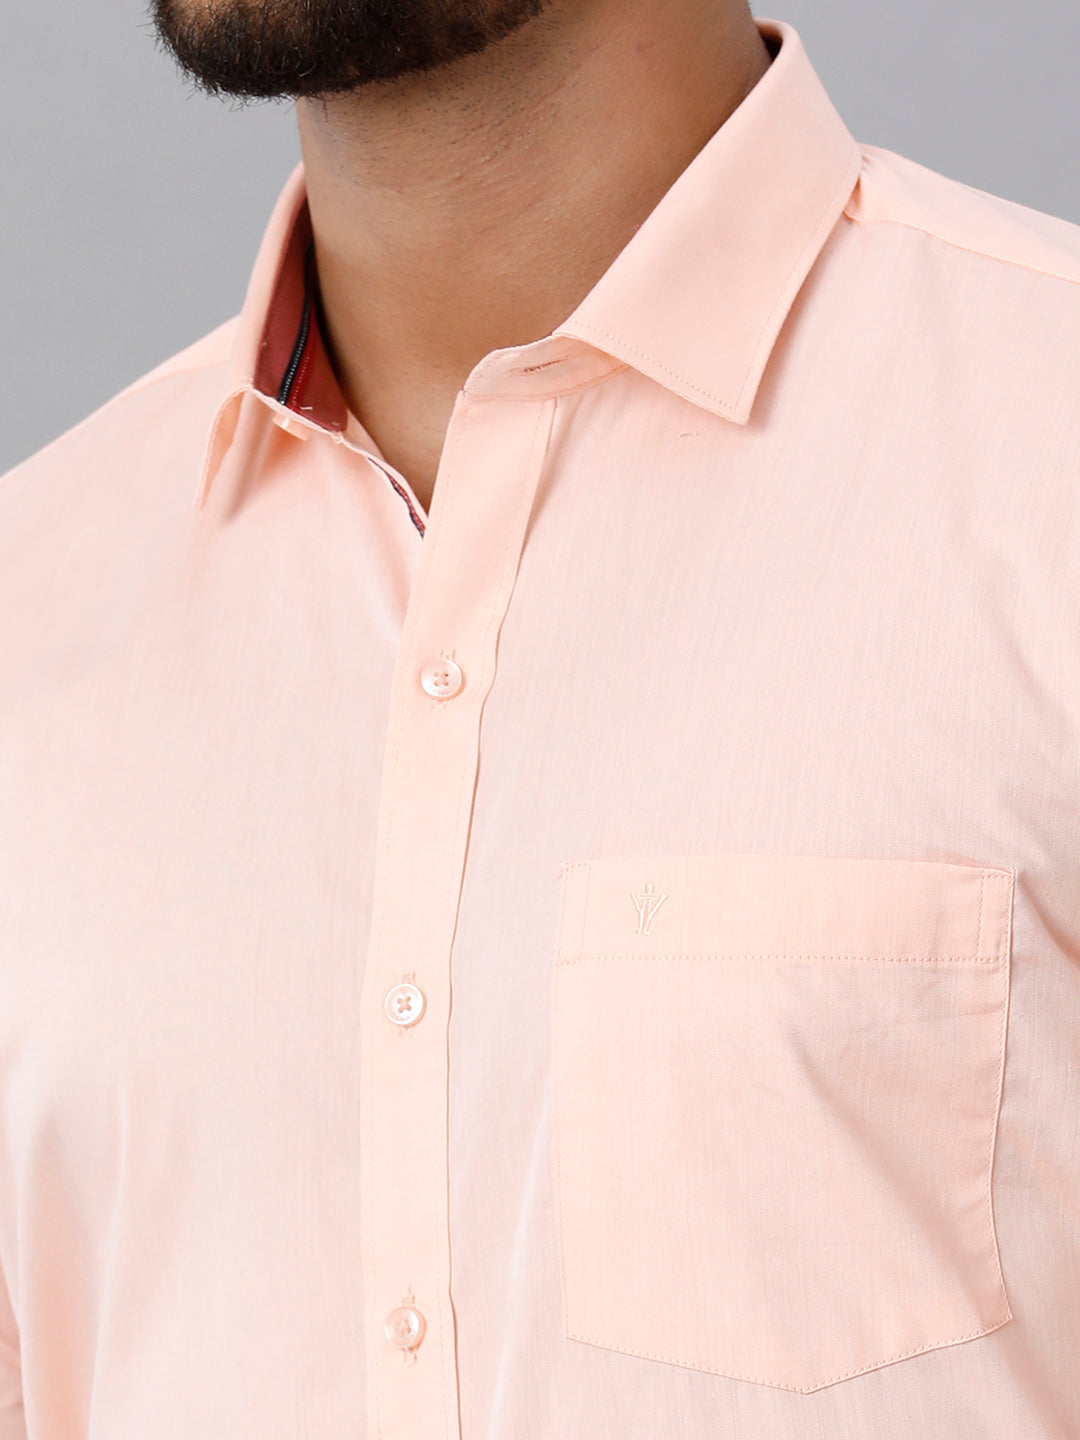 Mens Premium Cotton Formal Shirt Full Sleeves Light Orange MH G117-Zoom view